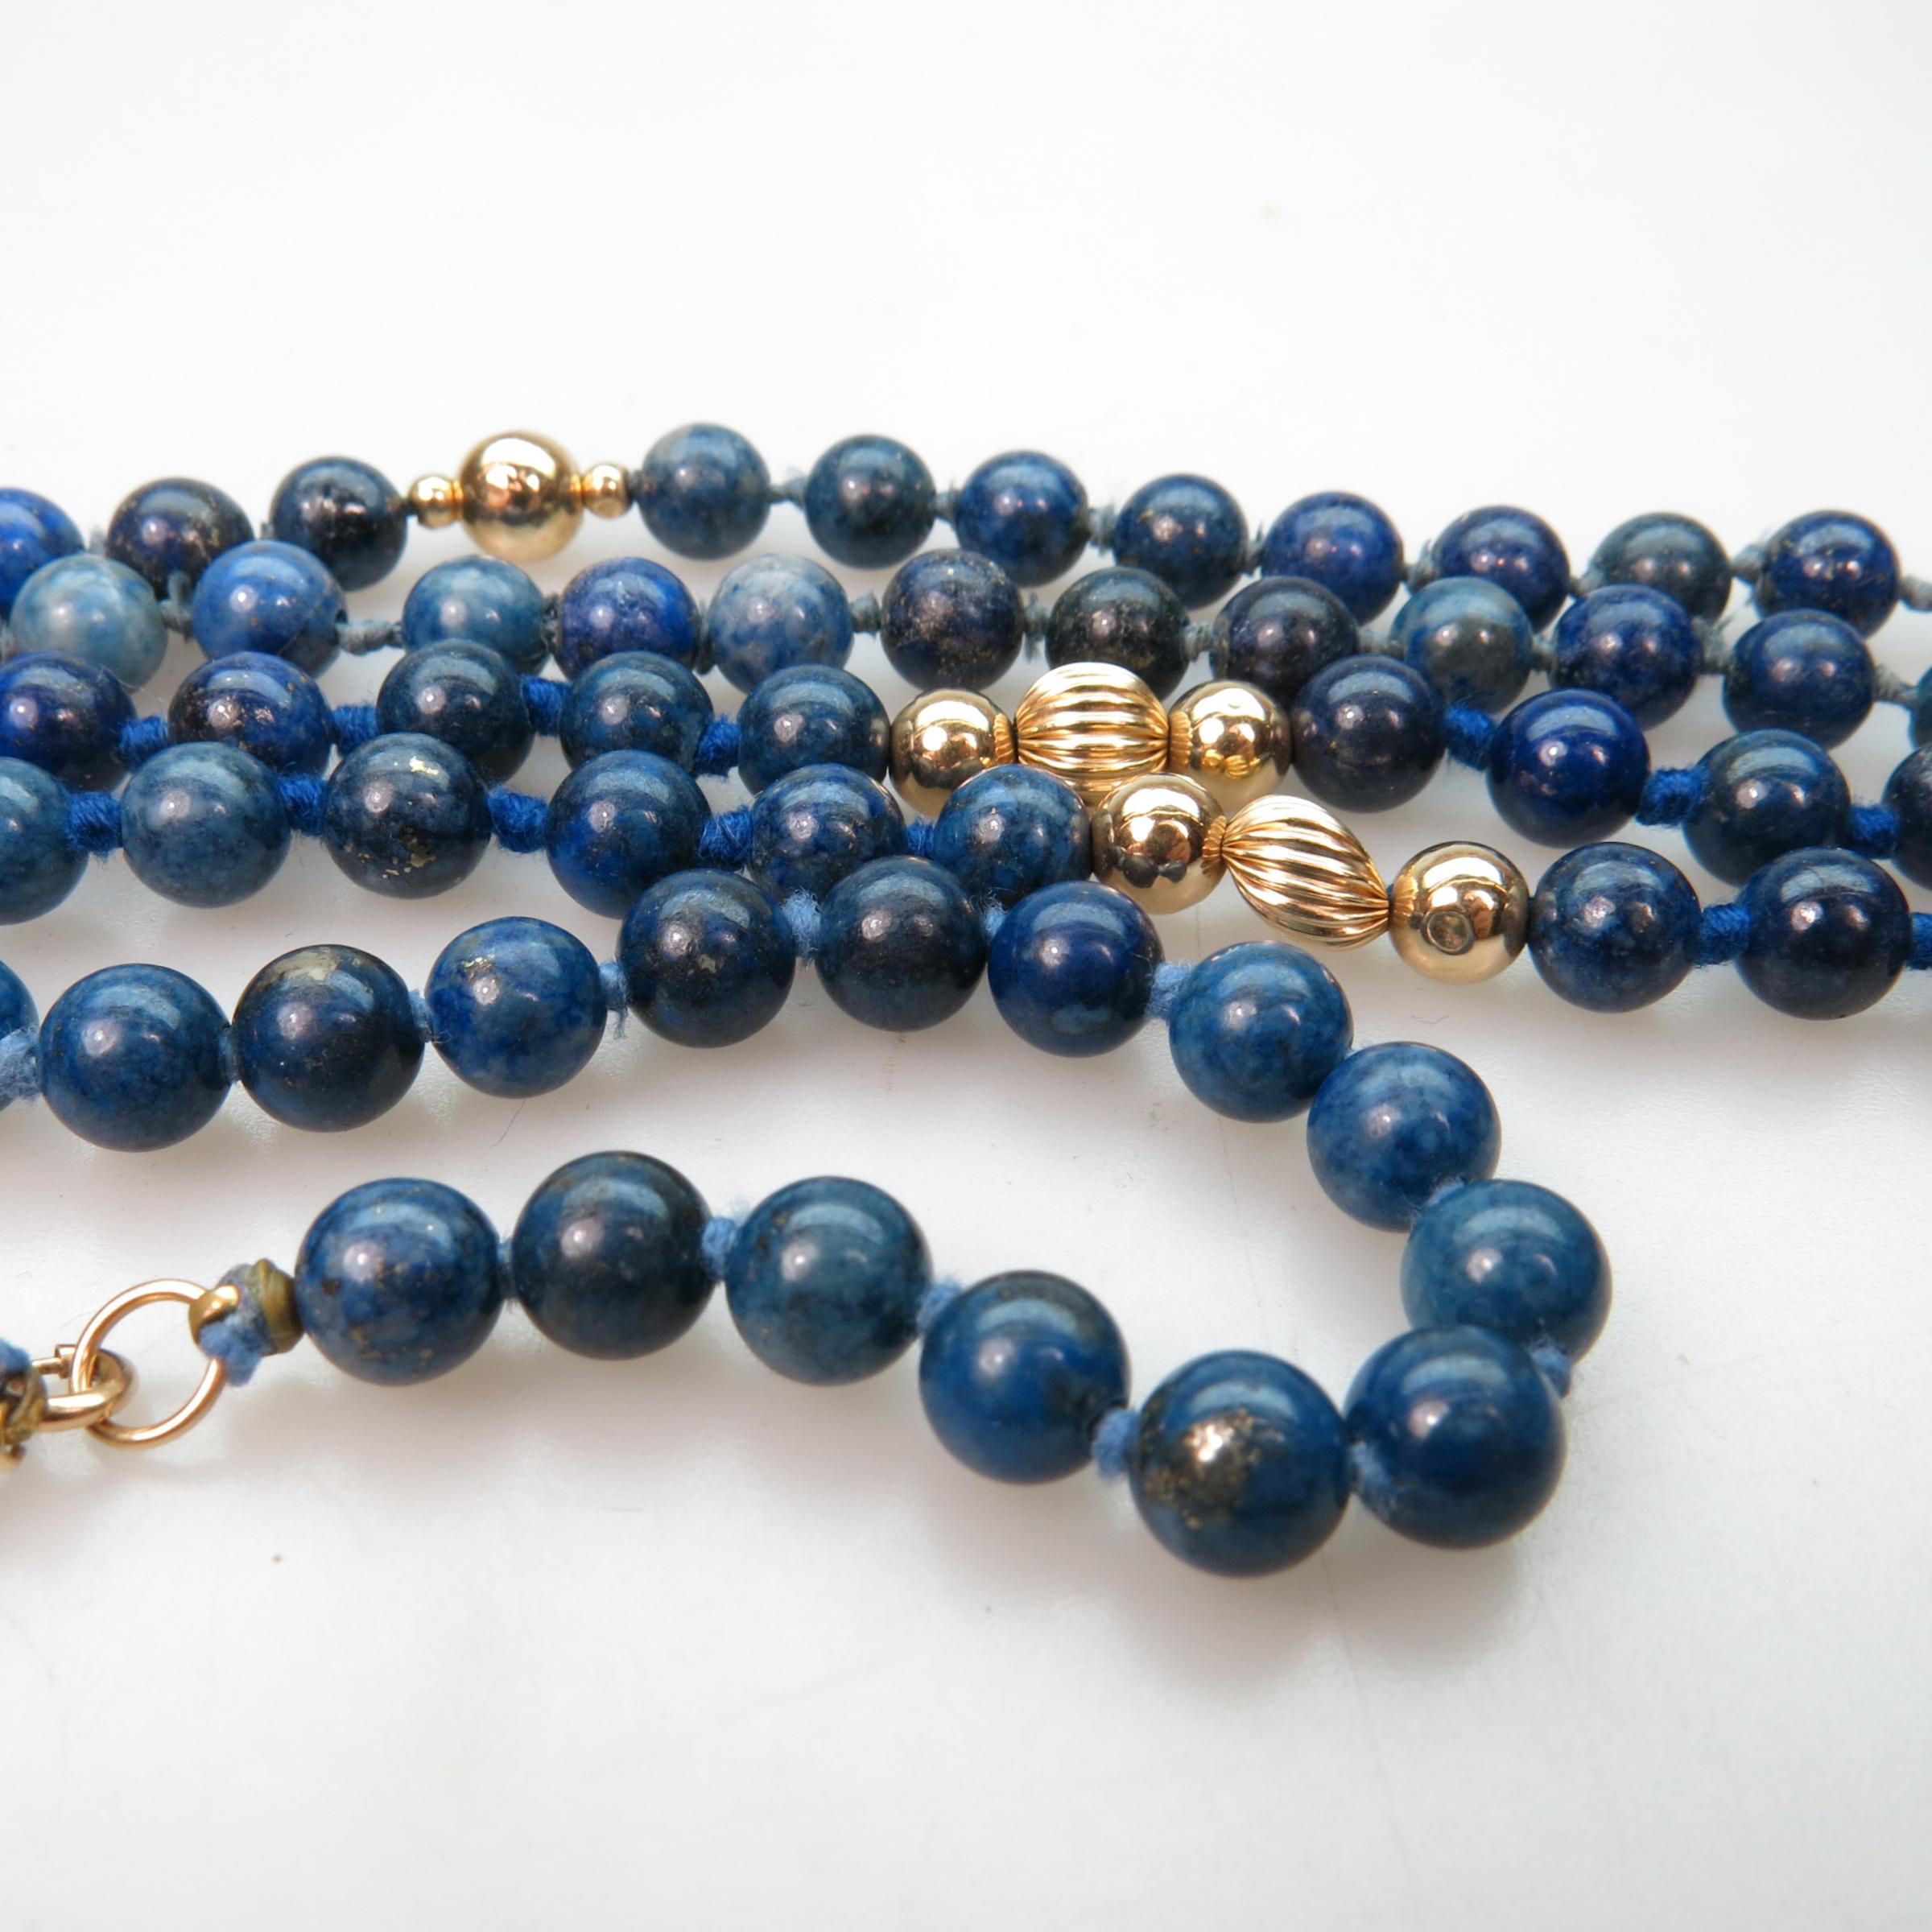 2 Single Strand Lapis Bead Necklaces And A Bracelet